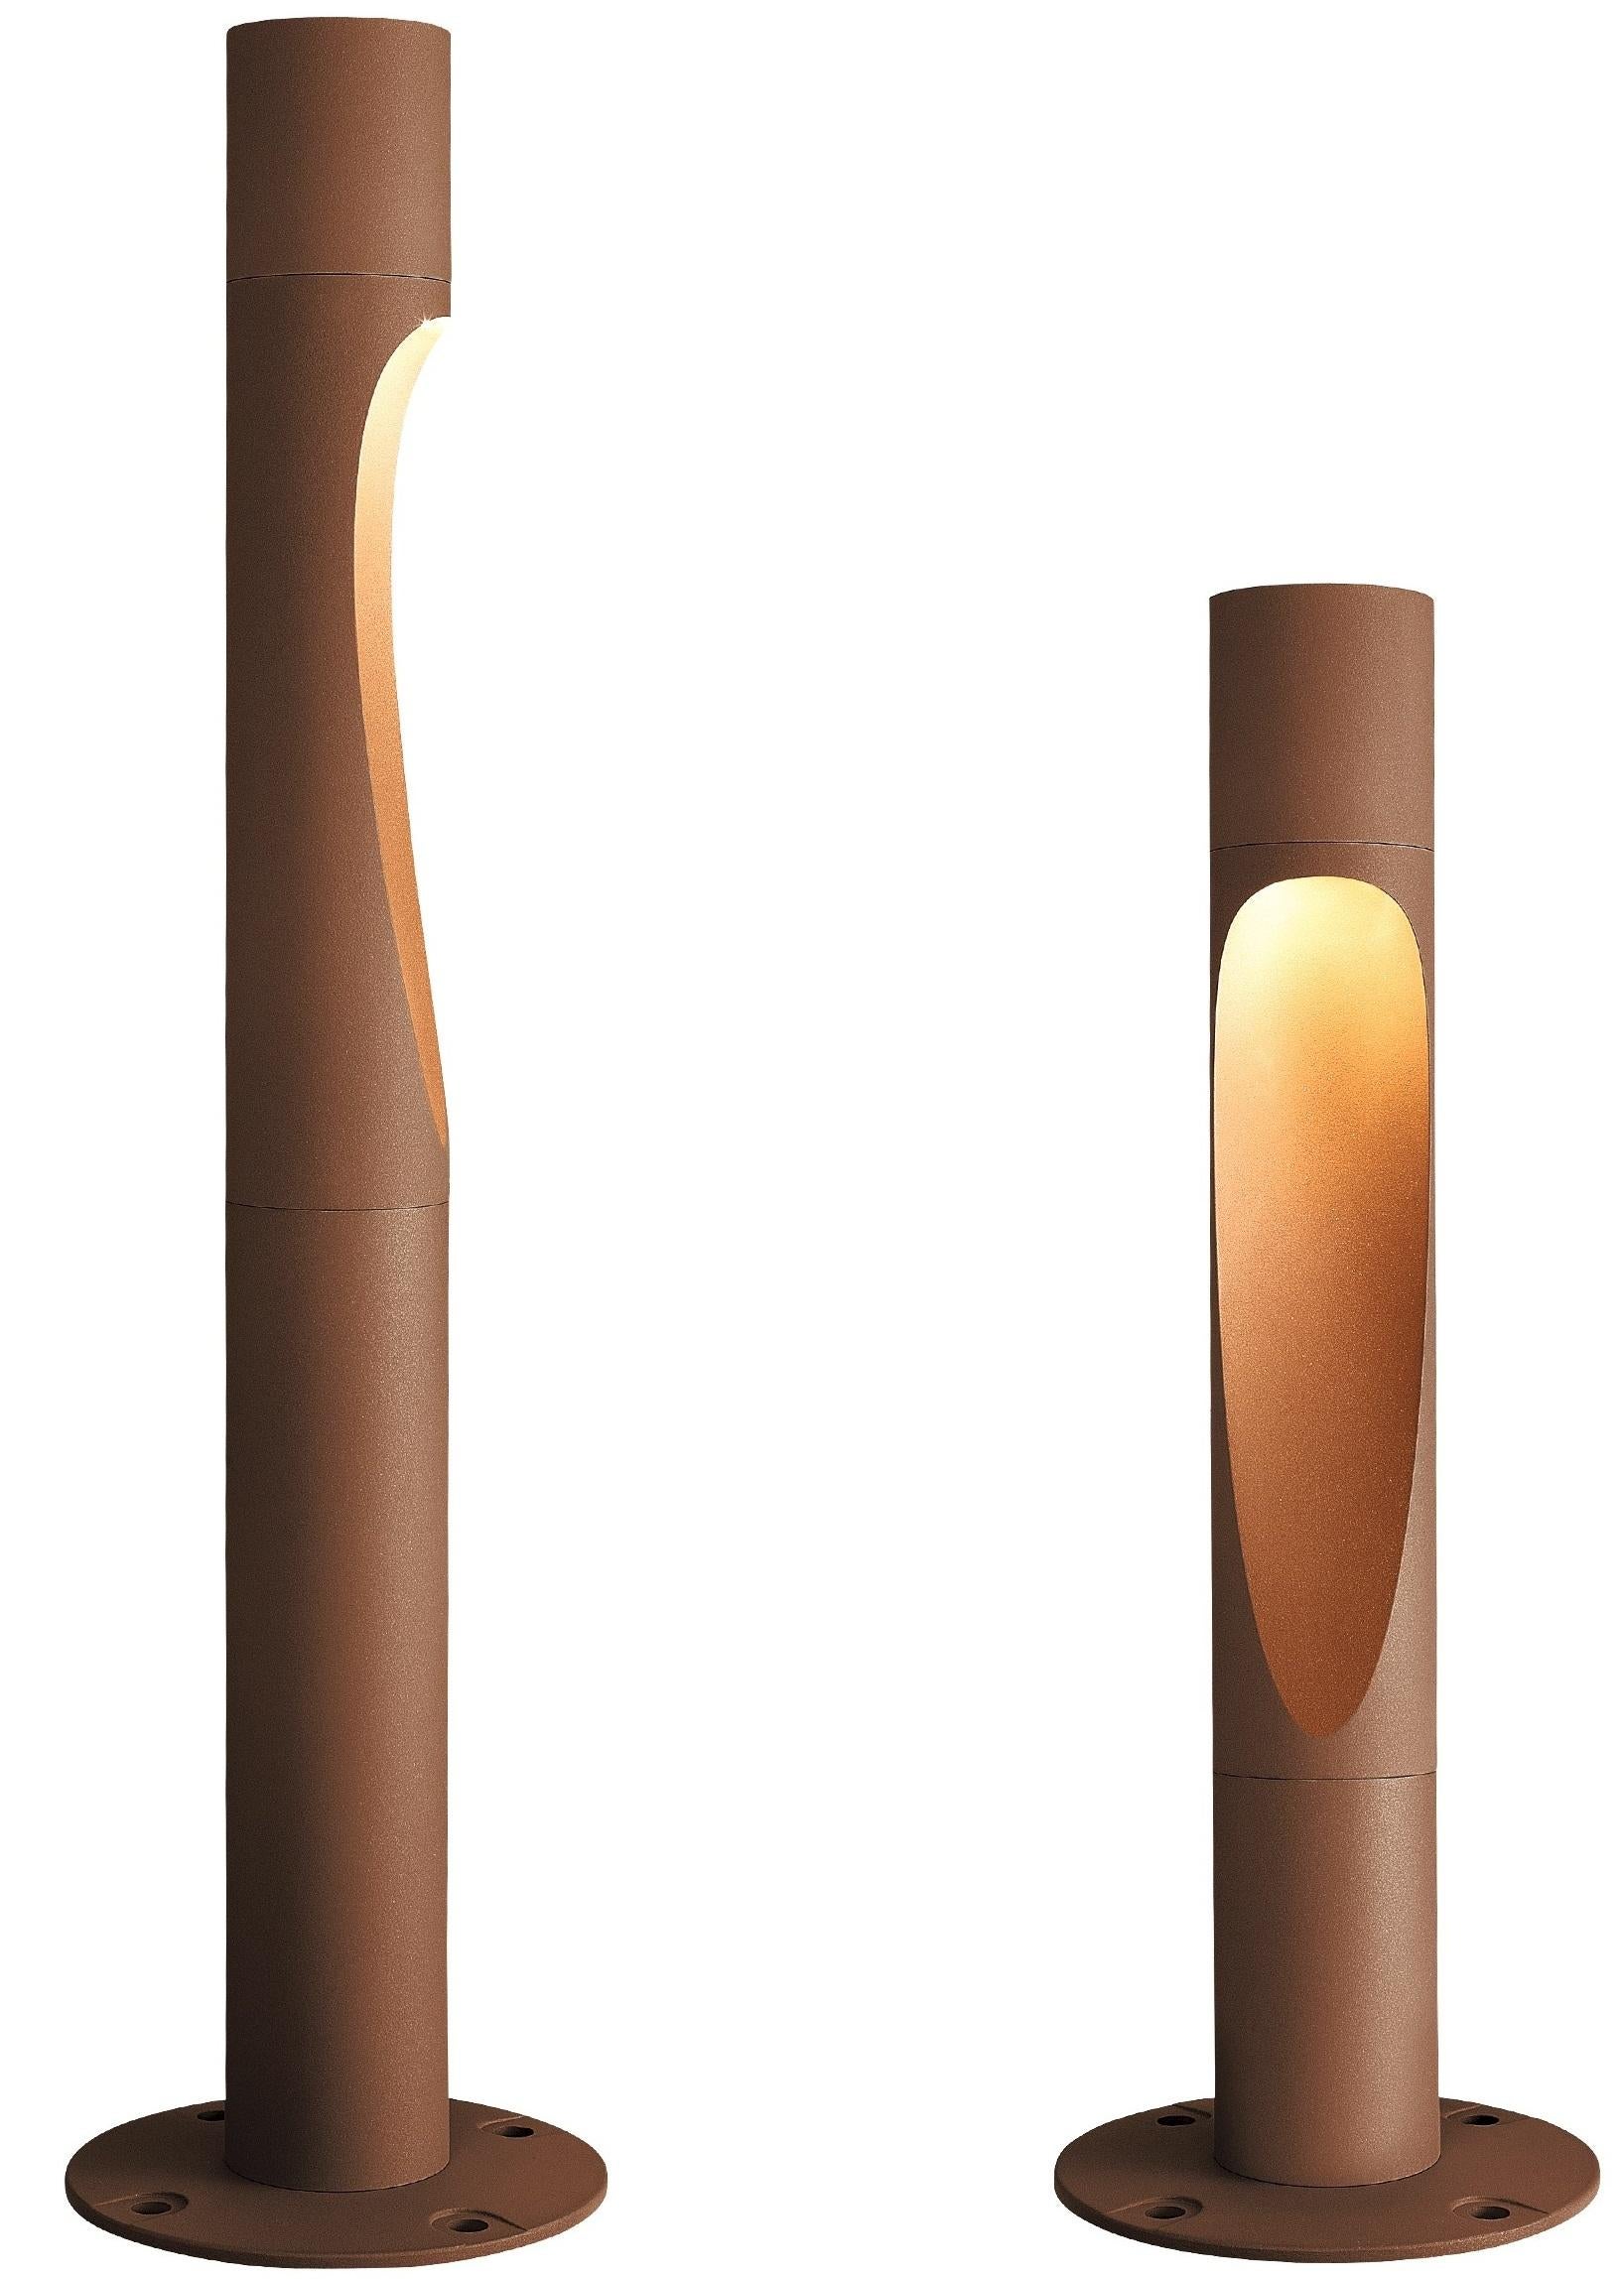 Louis Poulsen, outdoor lamp by Cristian Flindt
Size: Width x height x length (mm)
80 * 11.5 cm, 7.1 kg or 110 * 11.8 cm, 8.5 kg
Light source LED 3000K 15W
Lumen: 578.